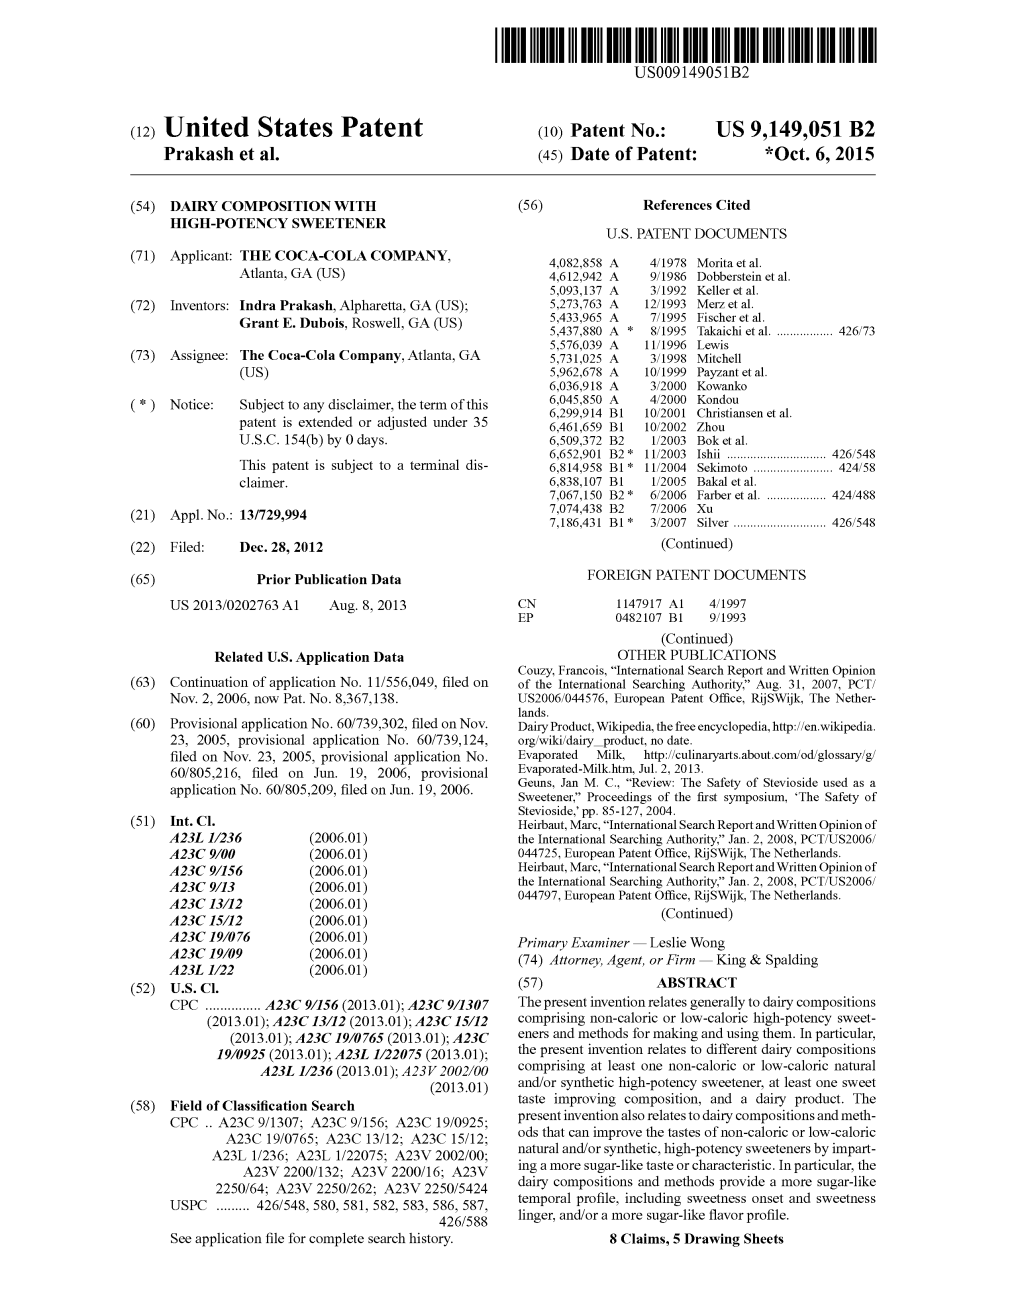 (12) United States Patent (10) Patent No.: US 9,149,051 B2 Prakash Et Al